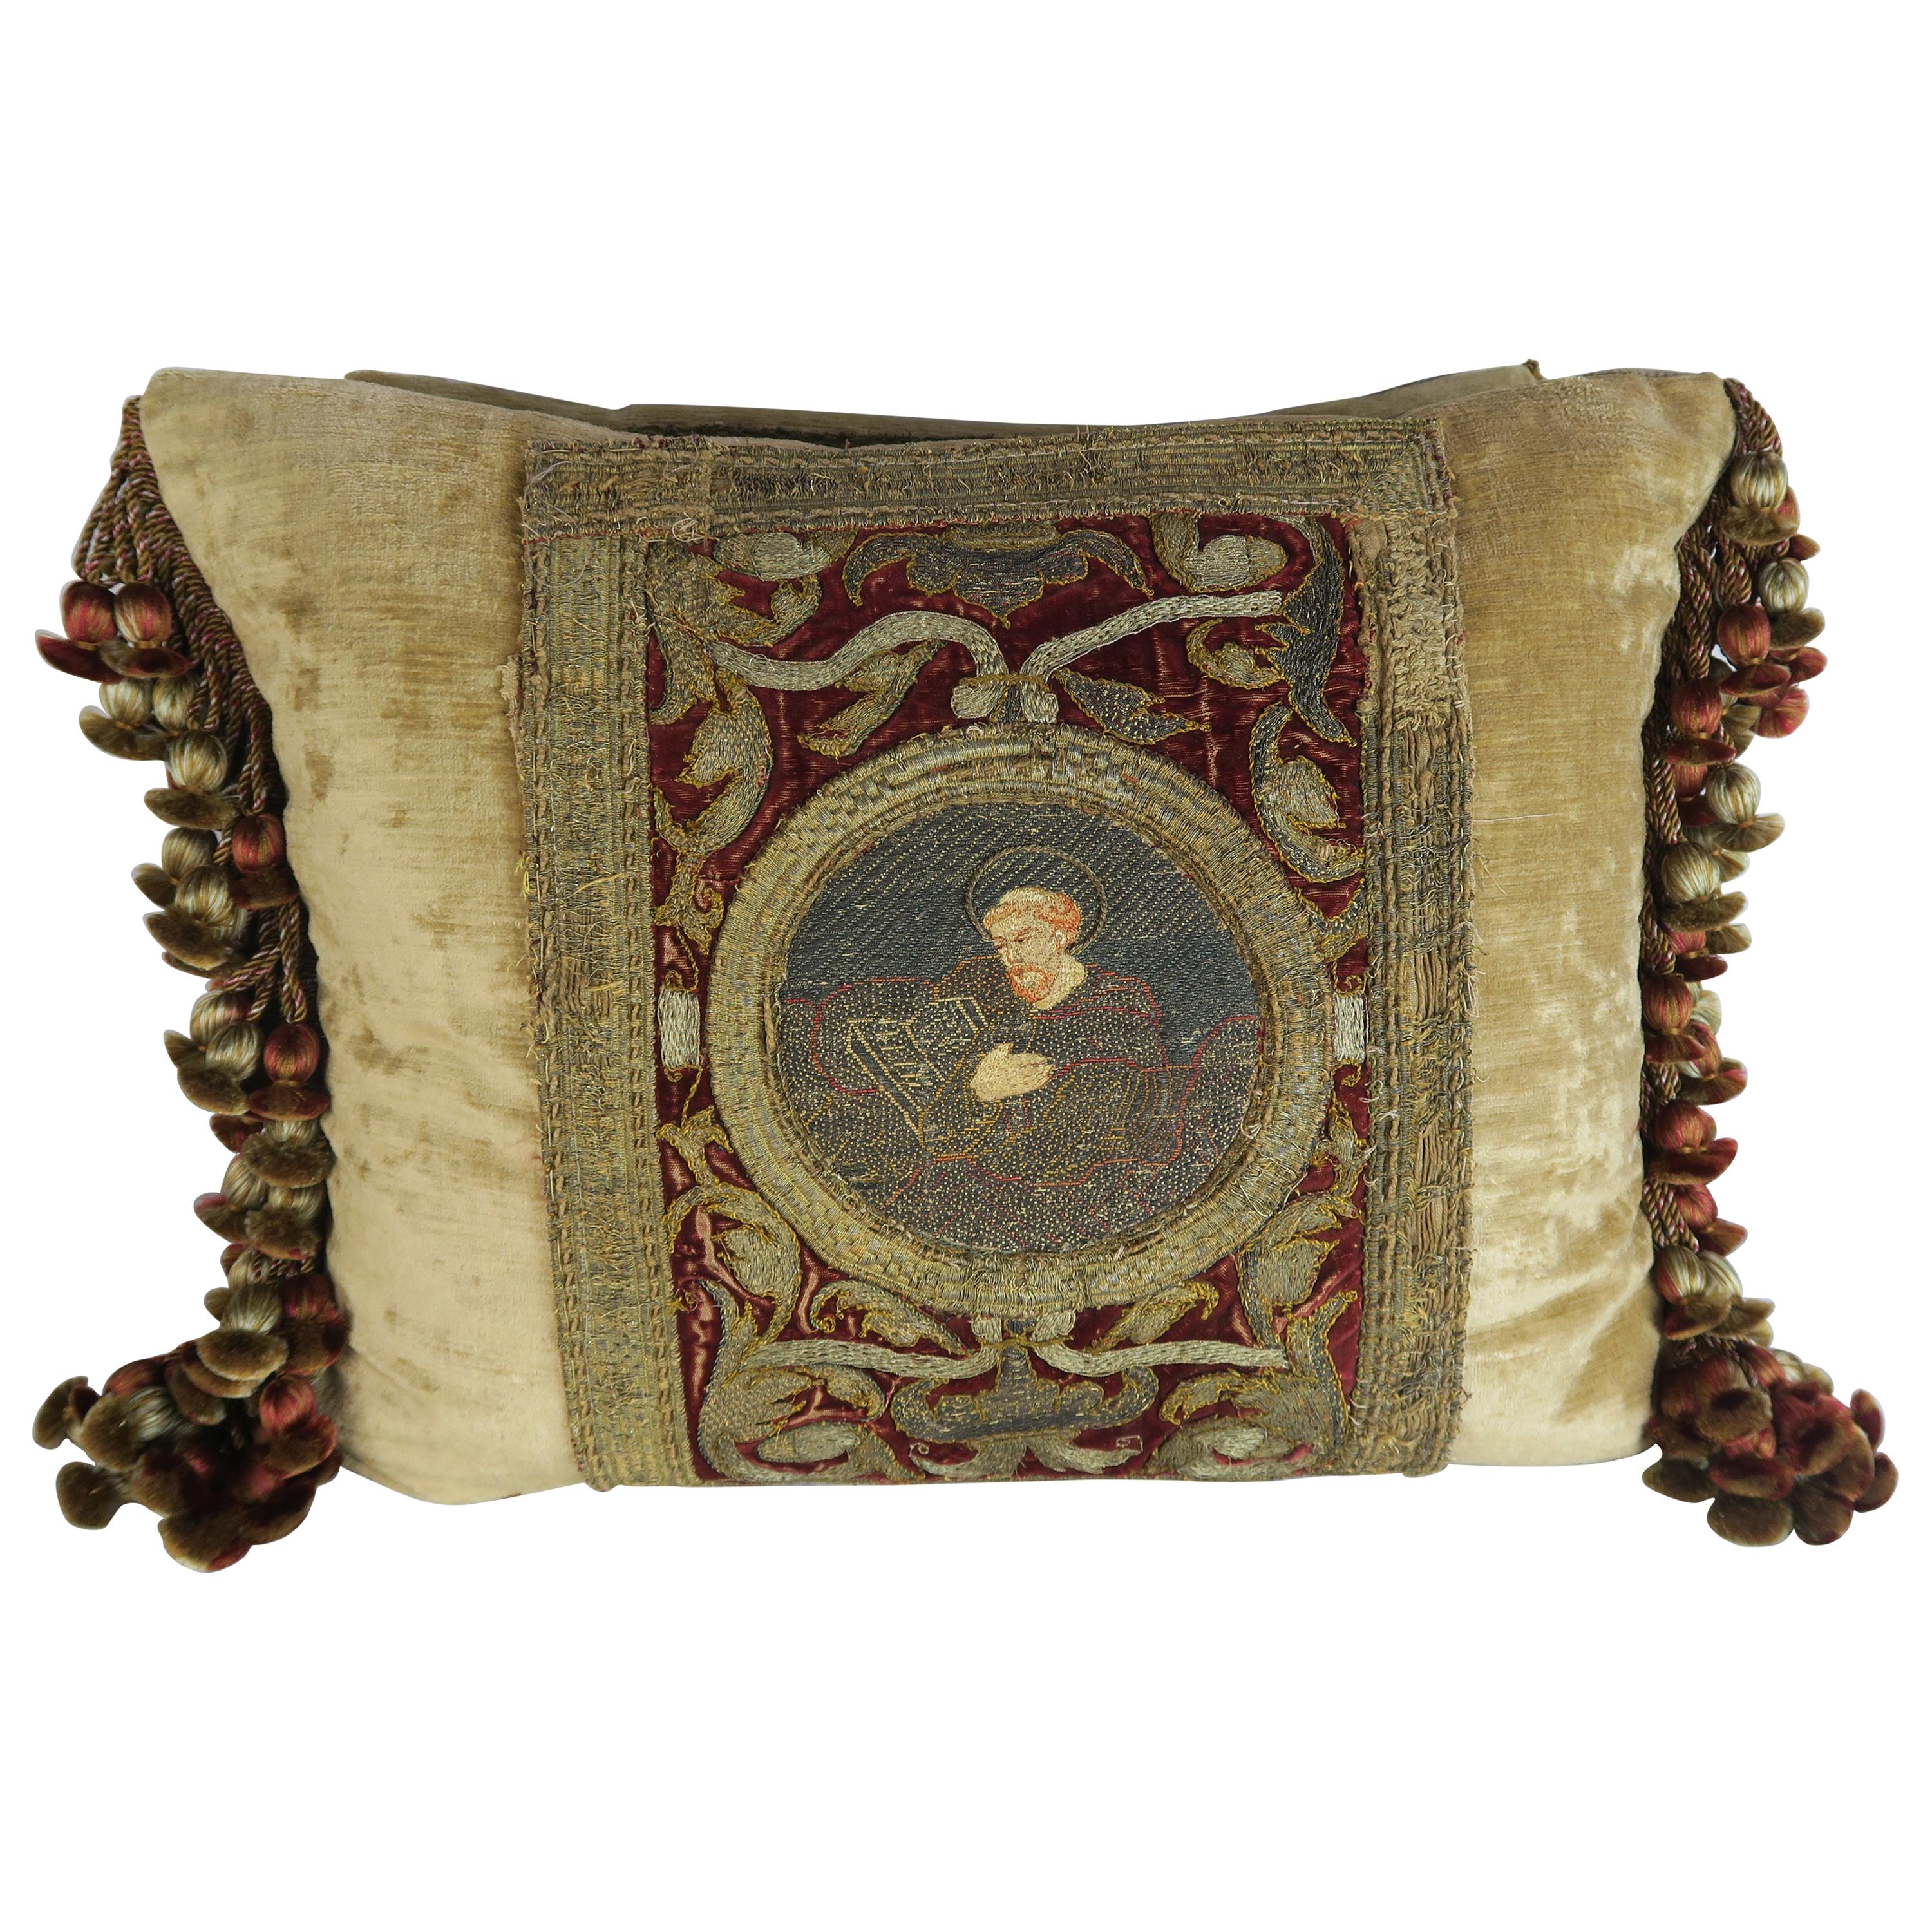 Pair of 18th Century Metallic Embroidered Velvet Pillows